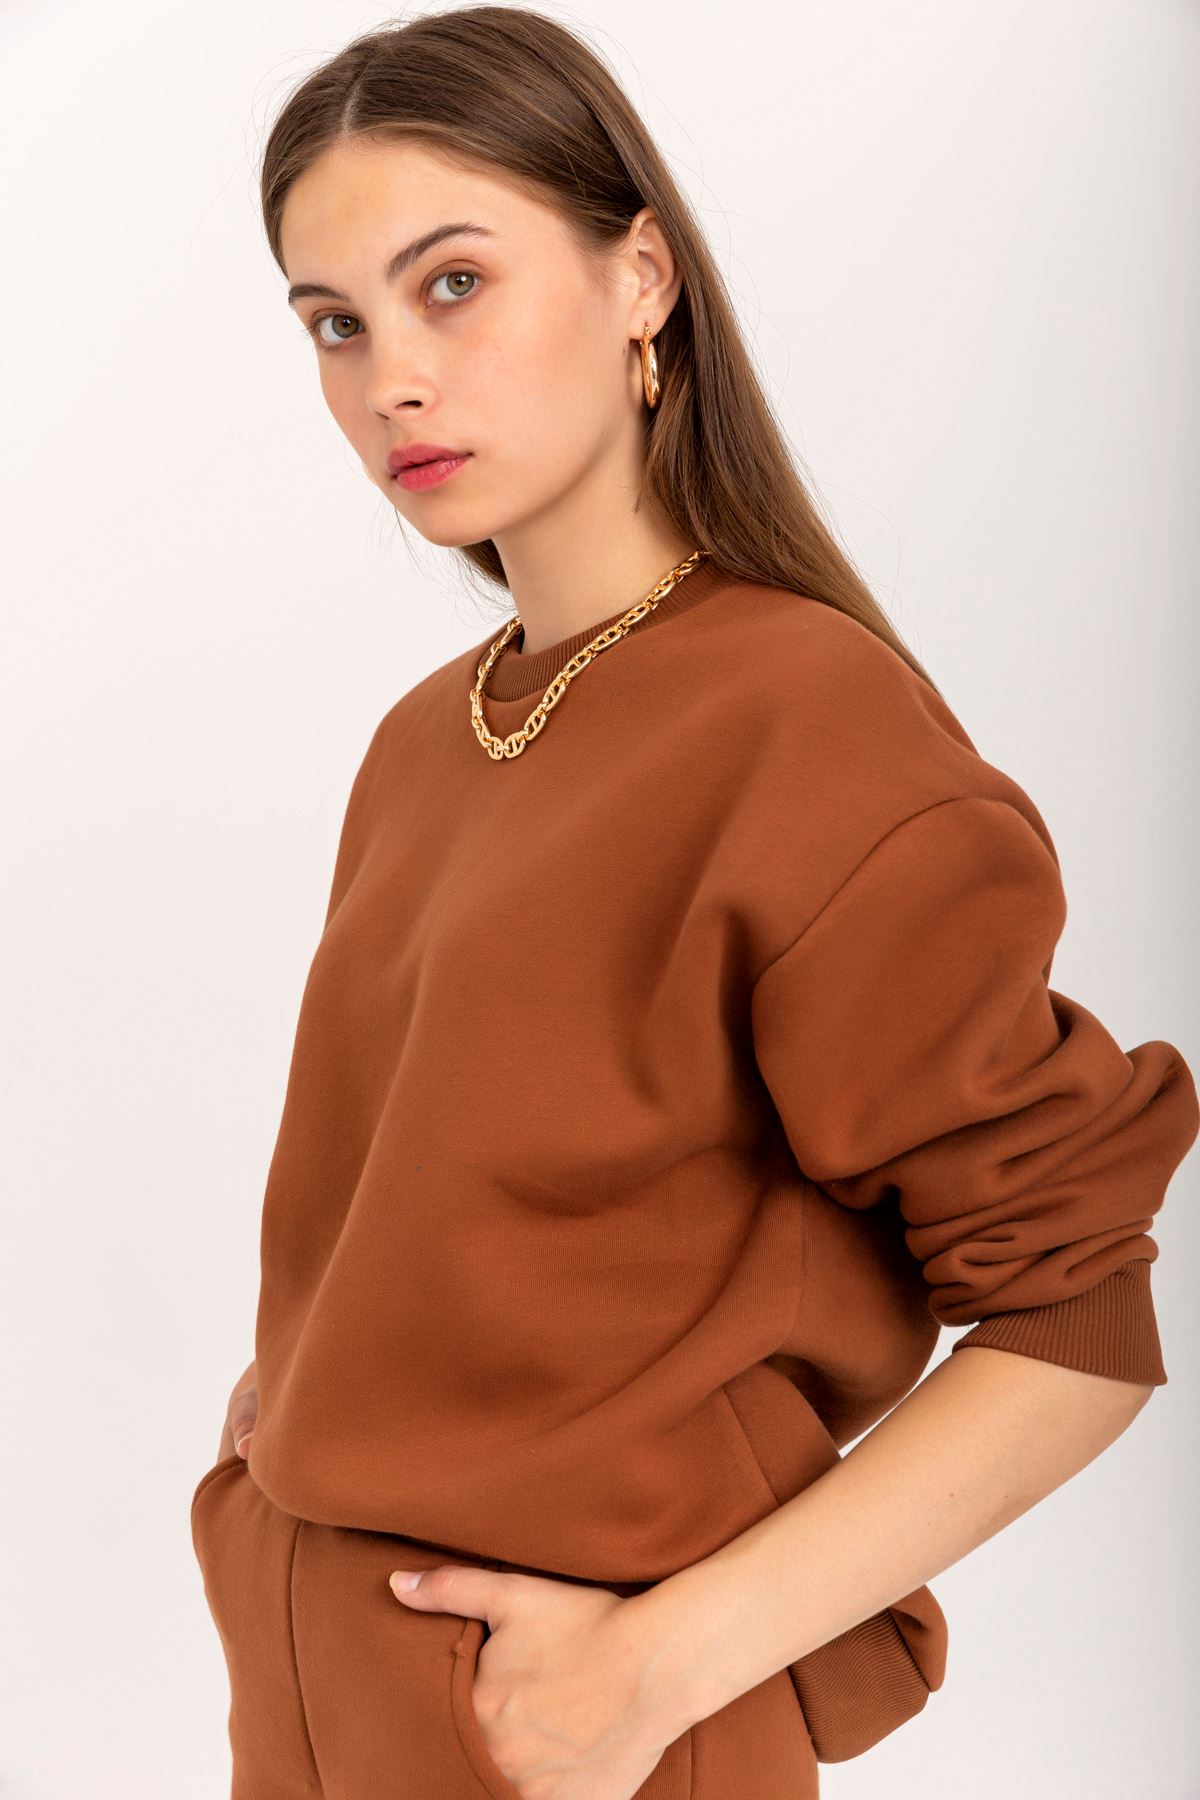 Third Knit With Wool İnside Fabric Long Sleeve Below Hip Women Sweatshirt - Brown